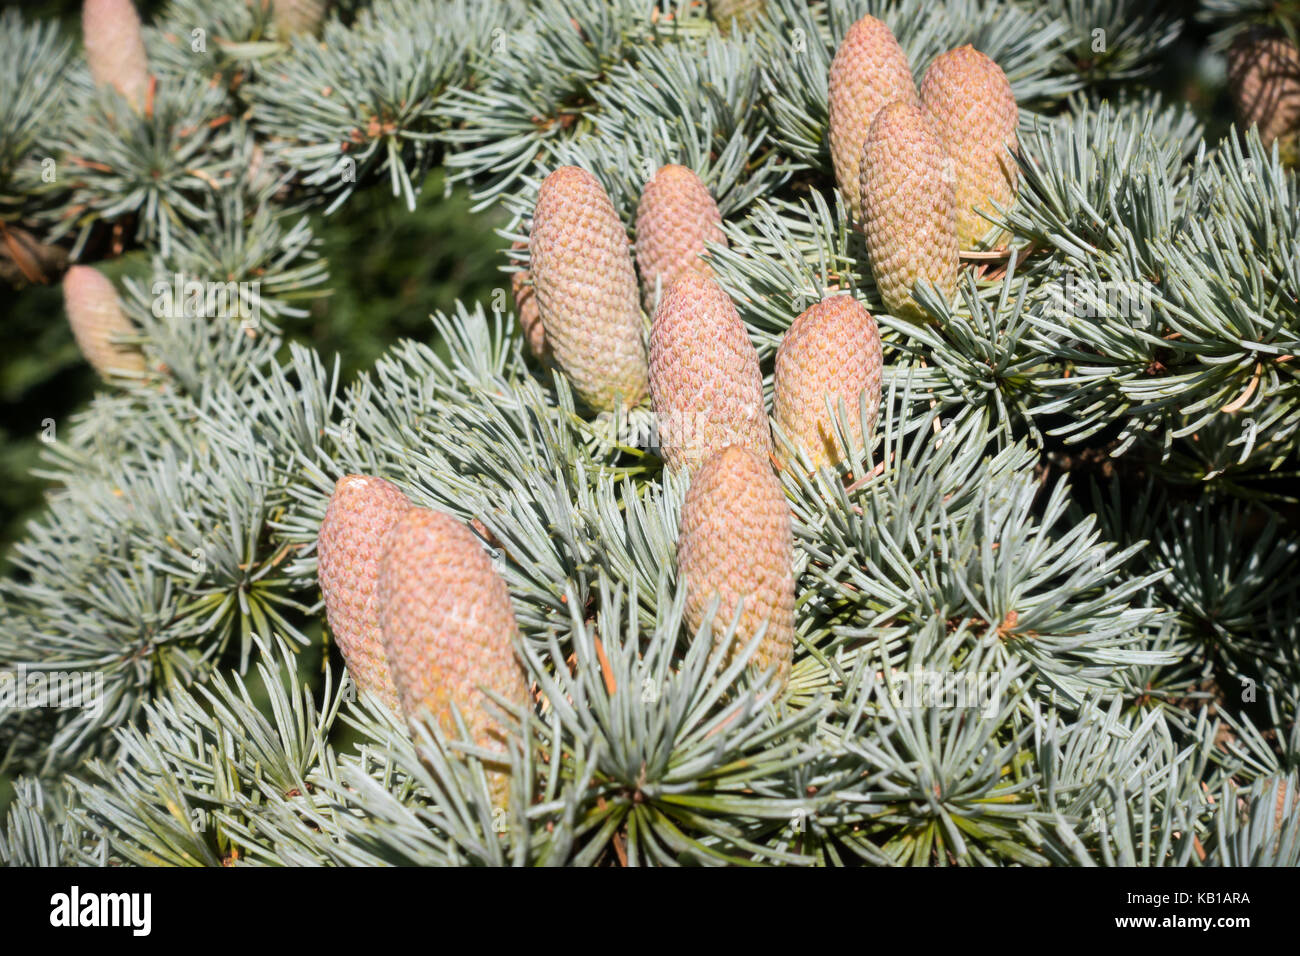 Closeup of a Atlas cedar (Cedrus atlantica) tree branches with cones. Stock Photo